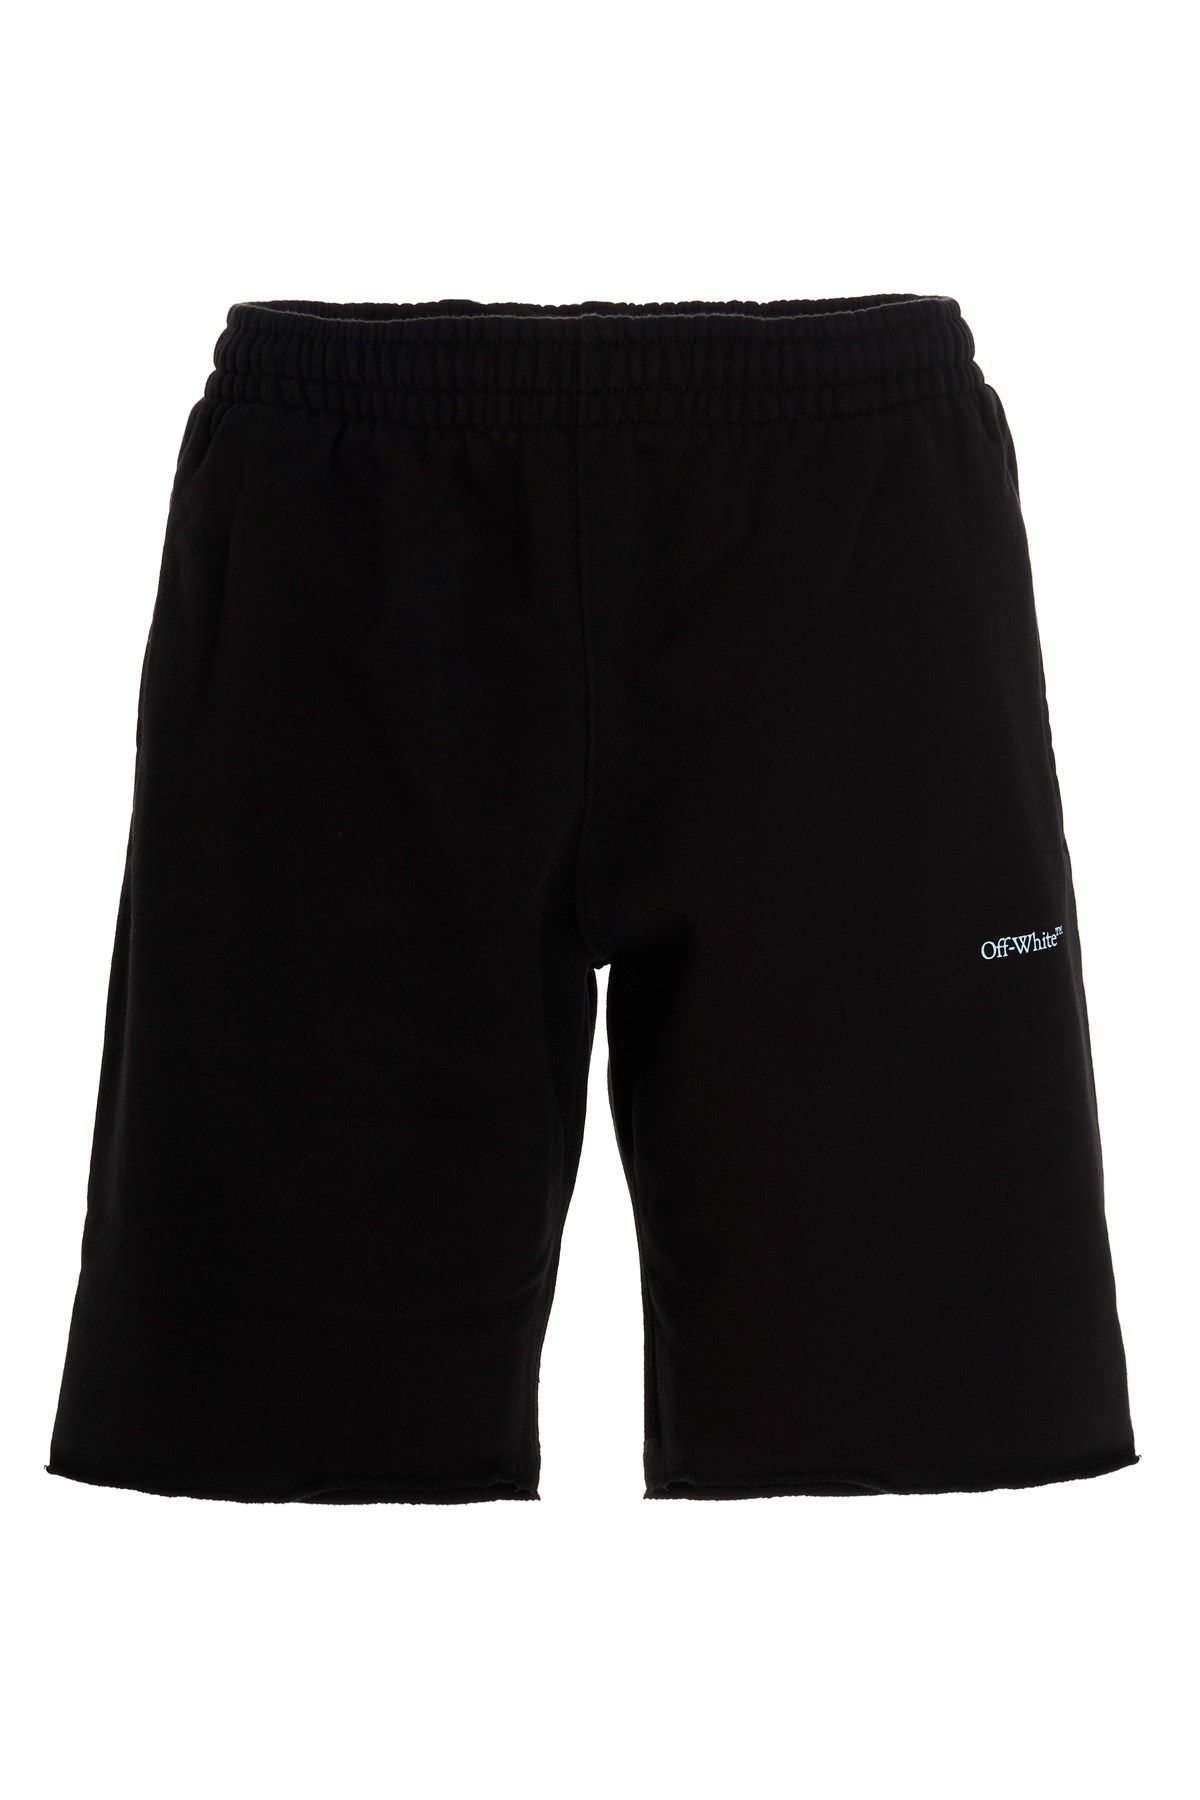 OFF-WHITE Bermuda-Shorts 'Marker'